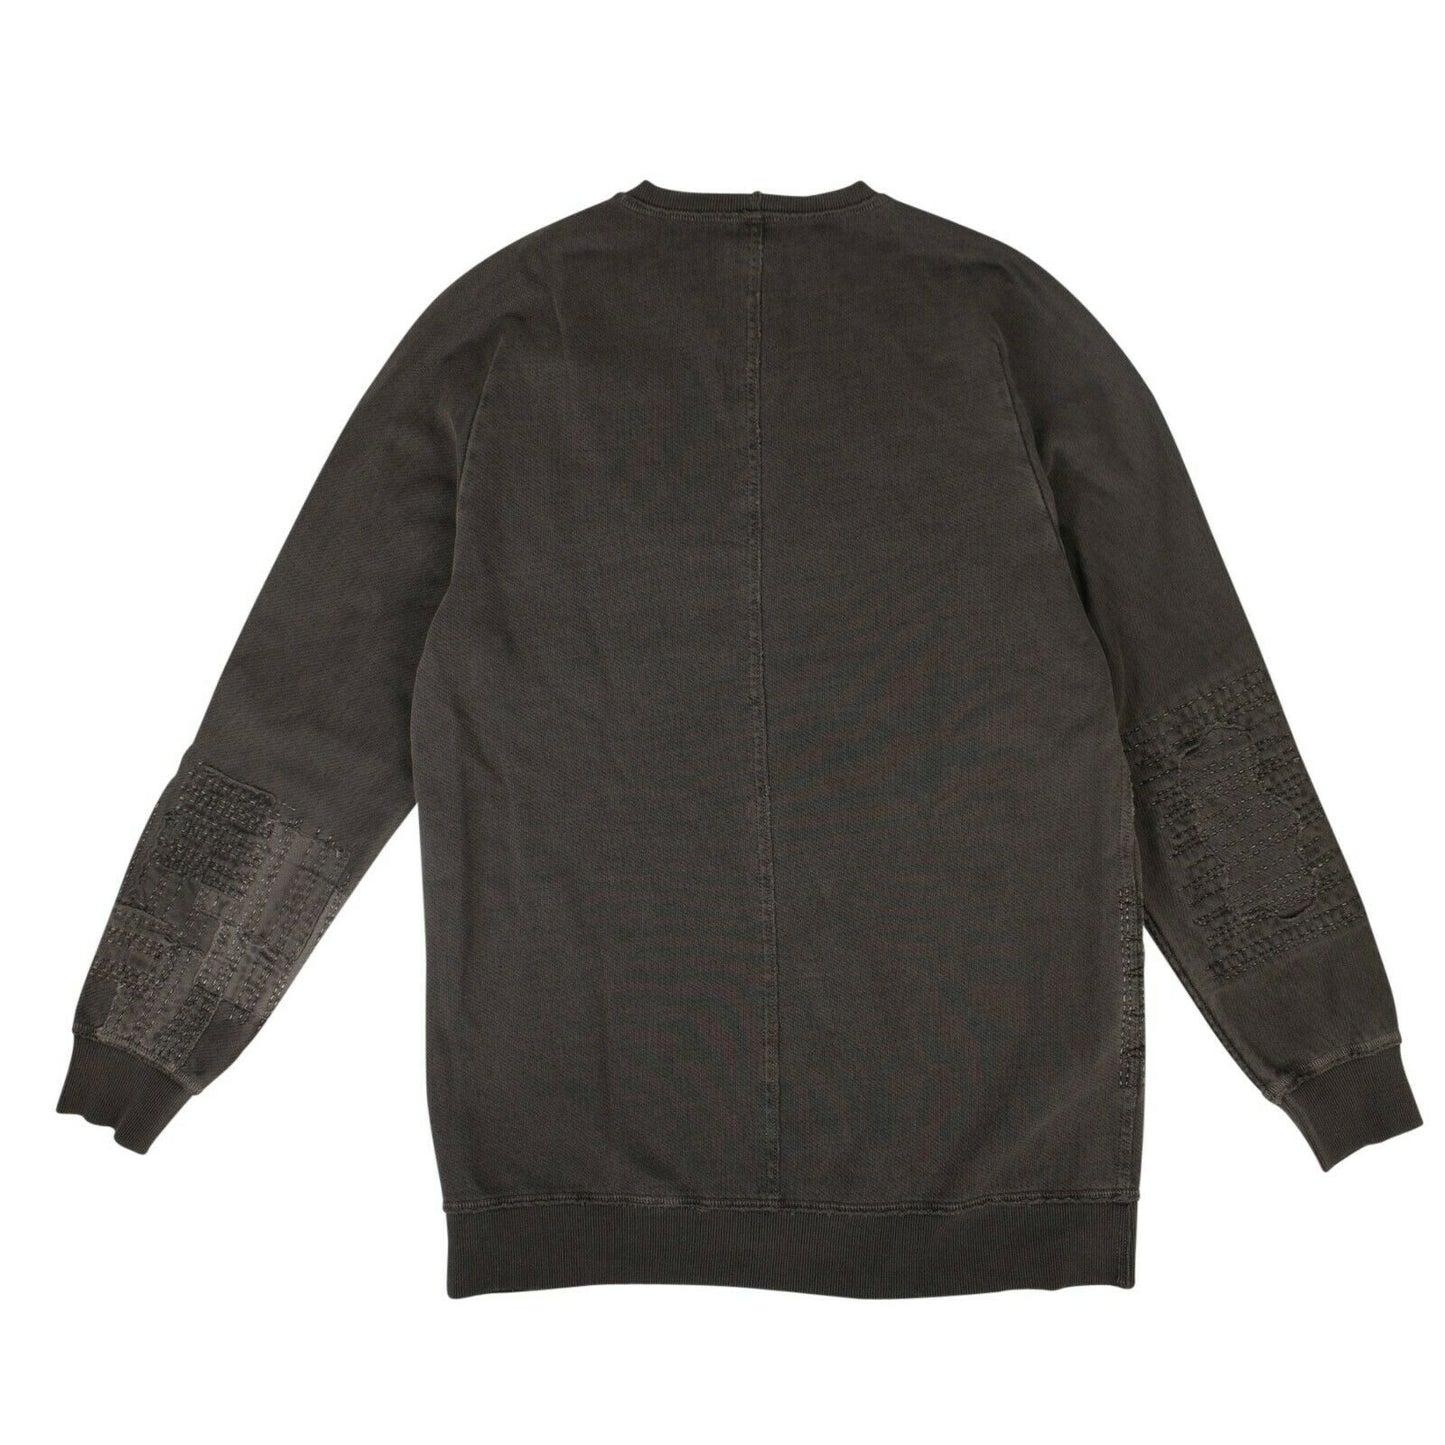 Maharishi Organic Cotton Boro Crew Sweater - Black